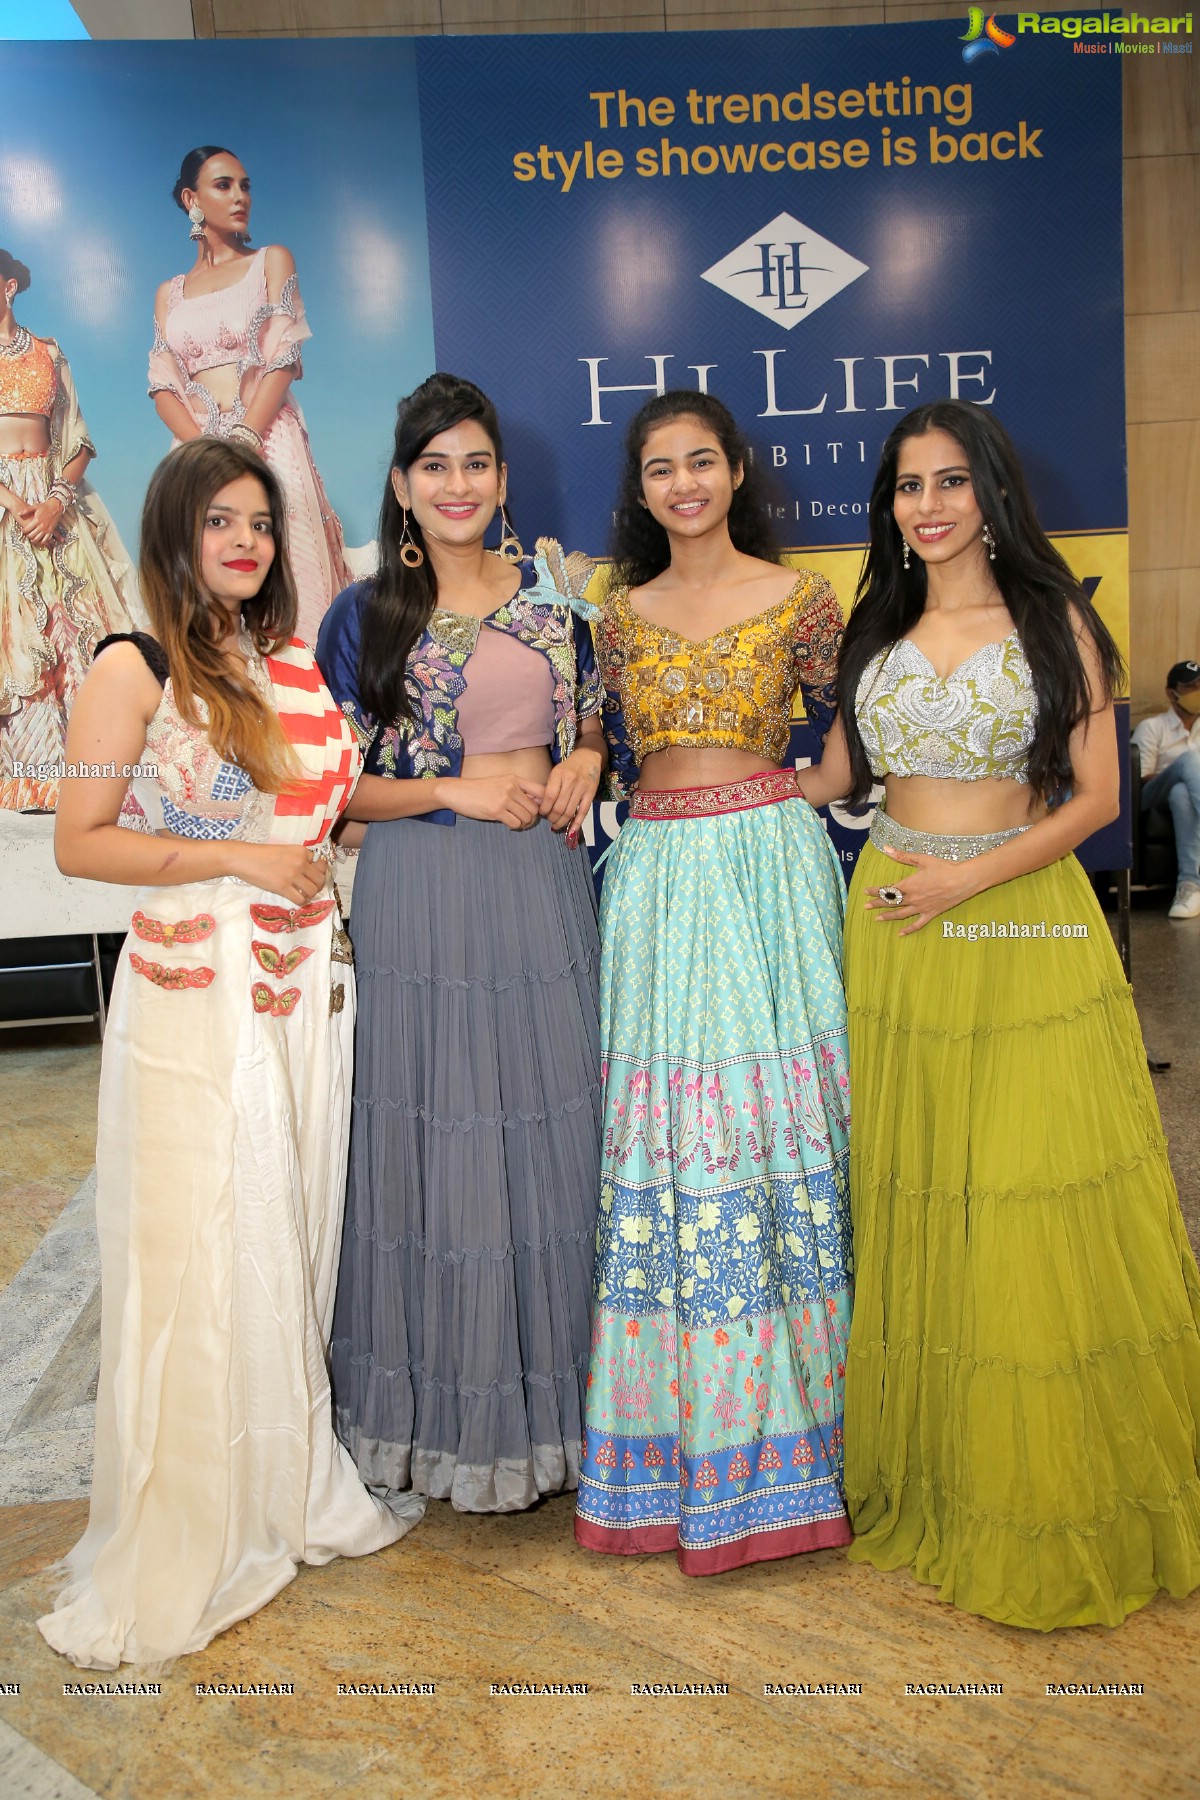 Hi Life Exhibition July 2021 Kicks Off at HICC-Novotel, Hyderabad